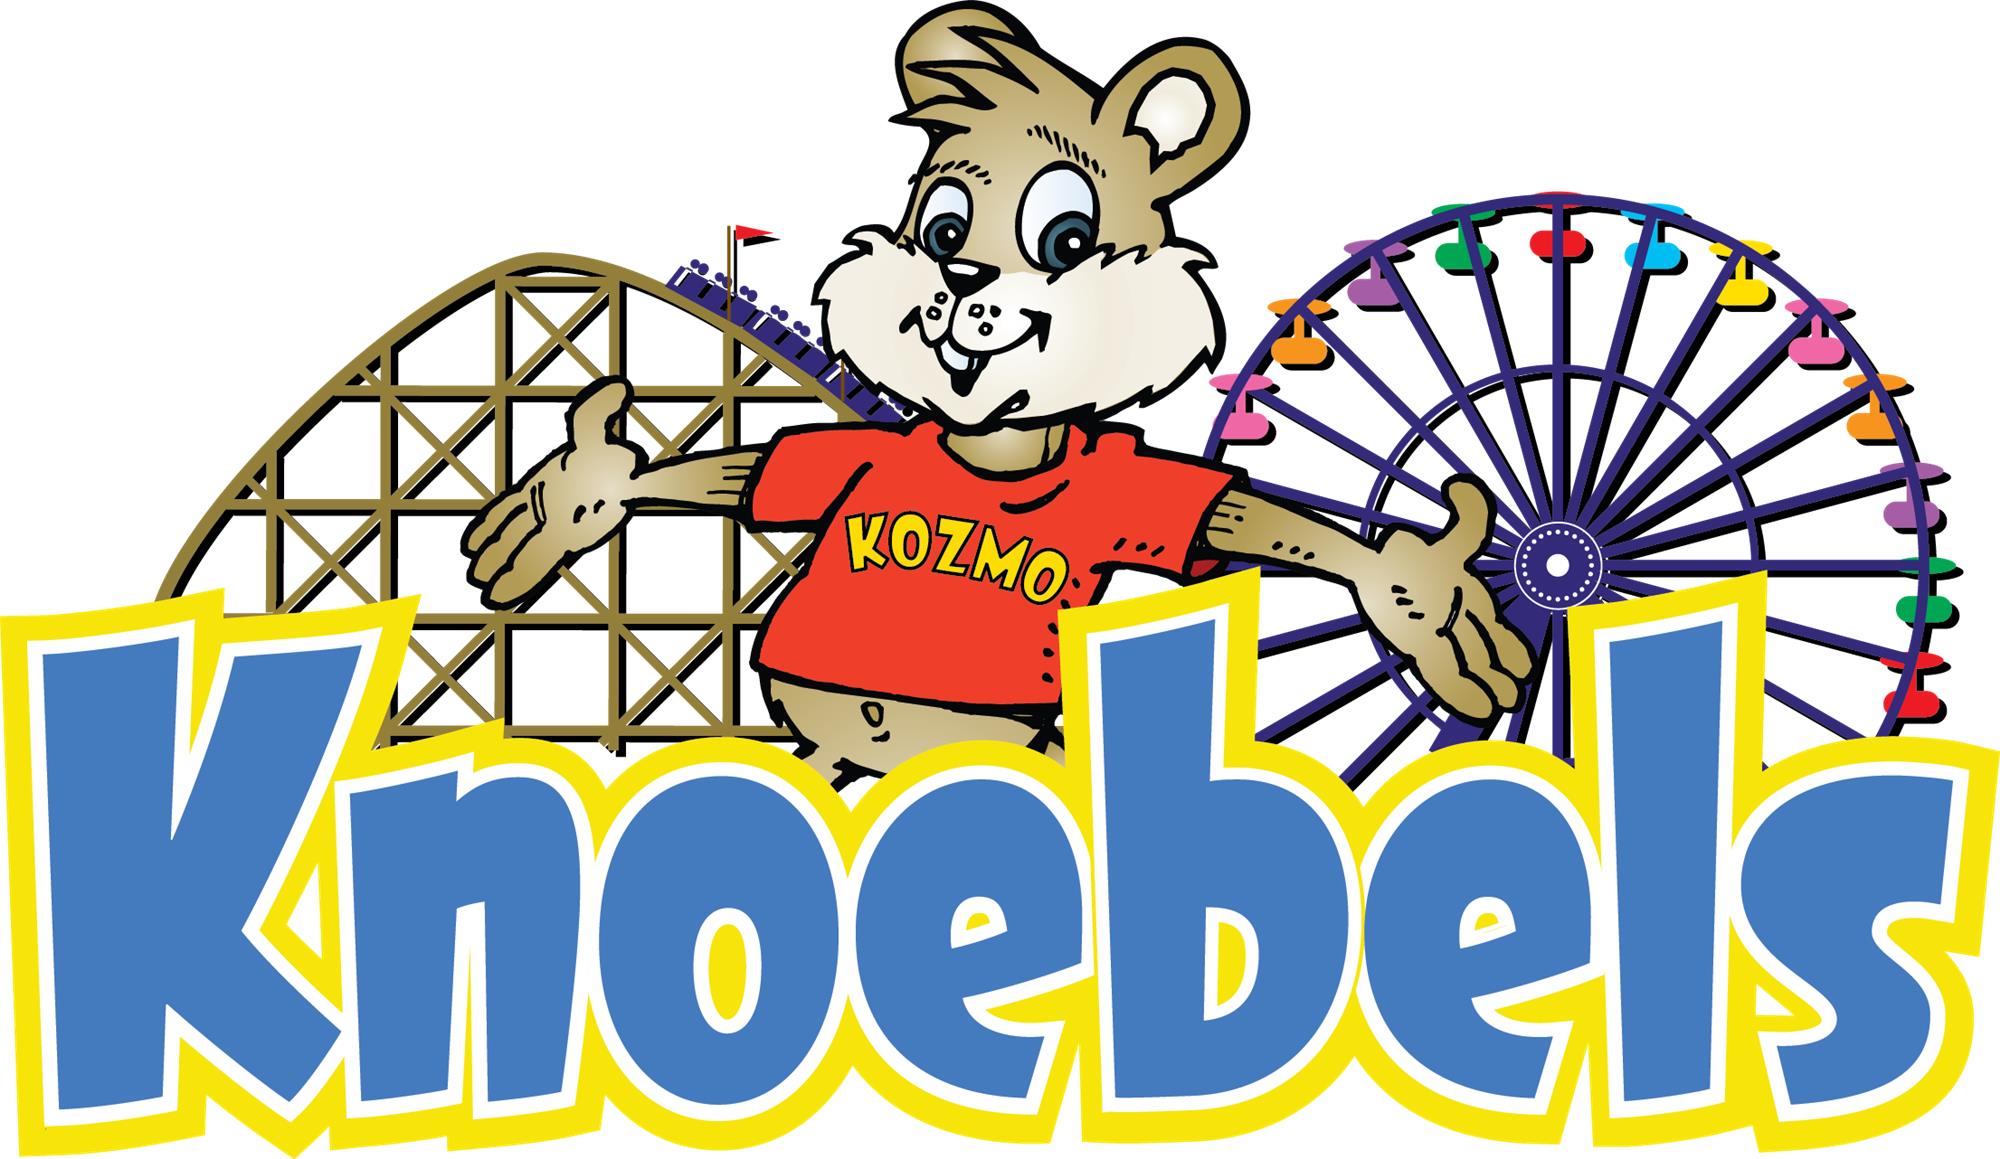 Knoebels Logo